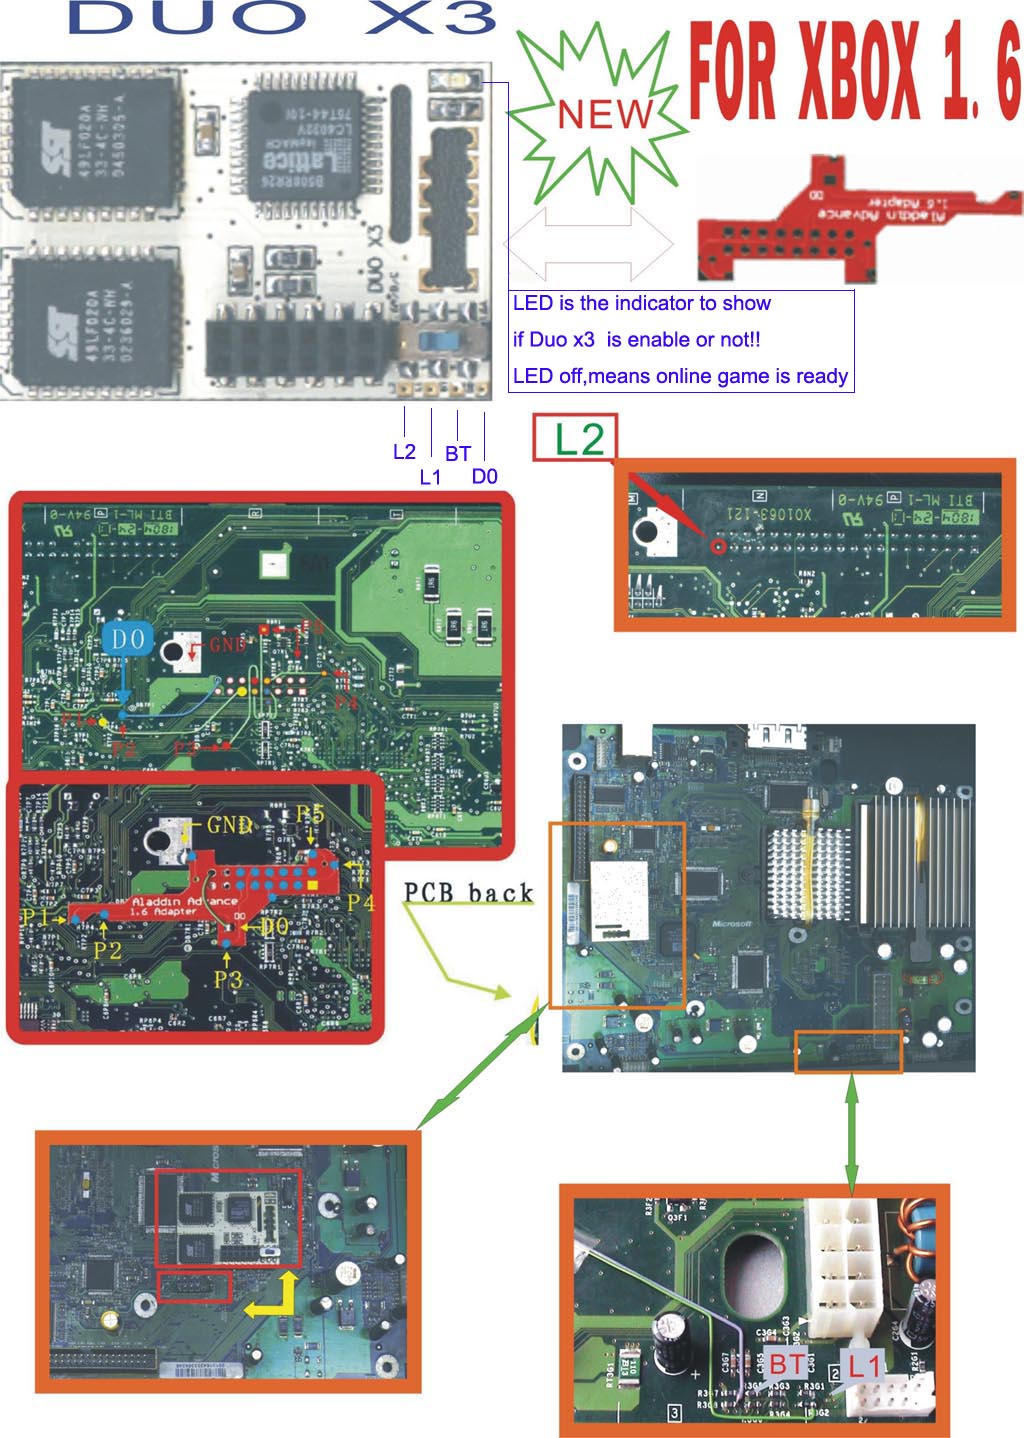 DuoX 3 chip bekötése 1.6-1.6b verziójú Xboxba